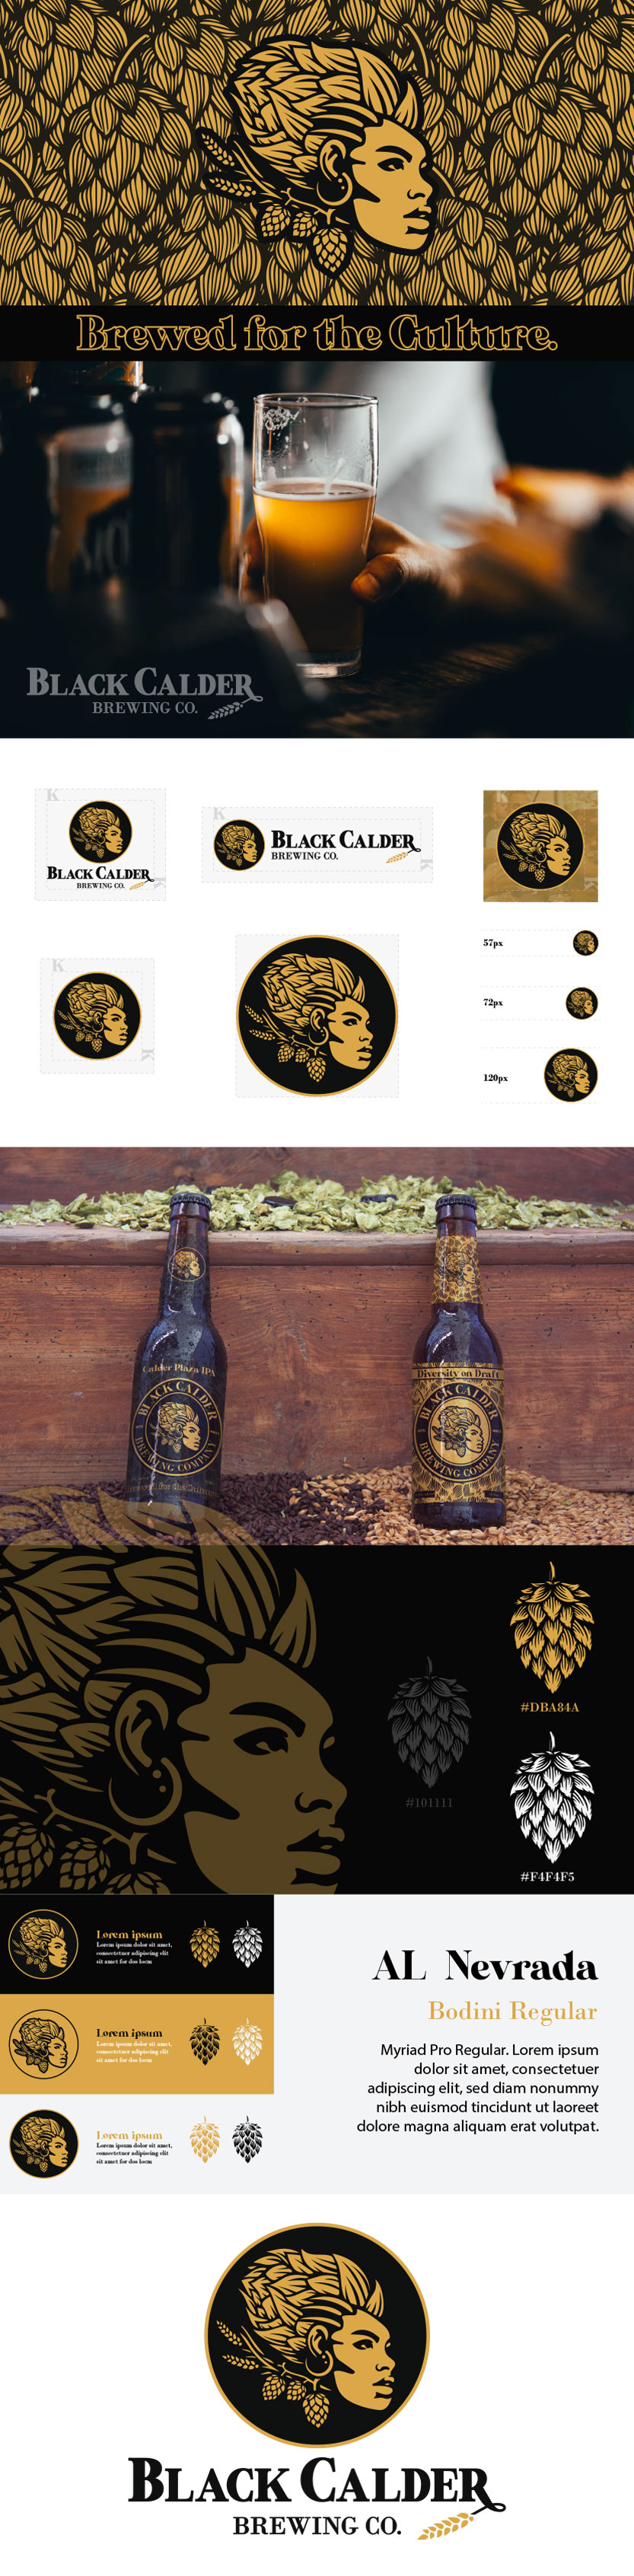 logo design and brand presentation for black calder brewery in grand rapids